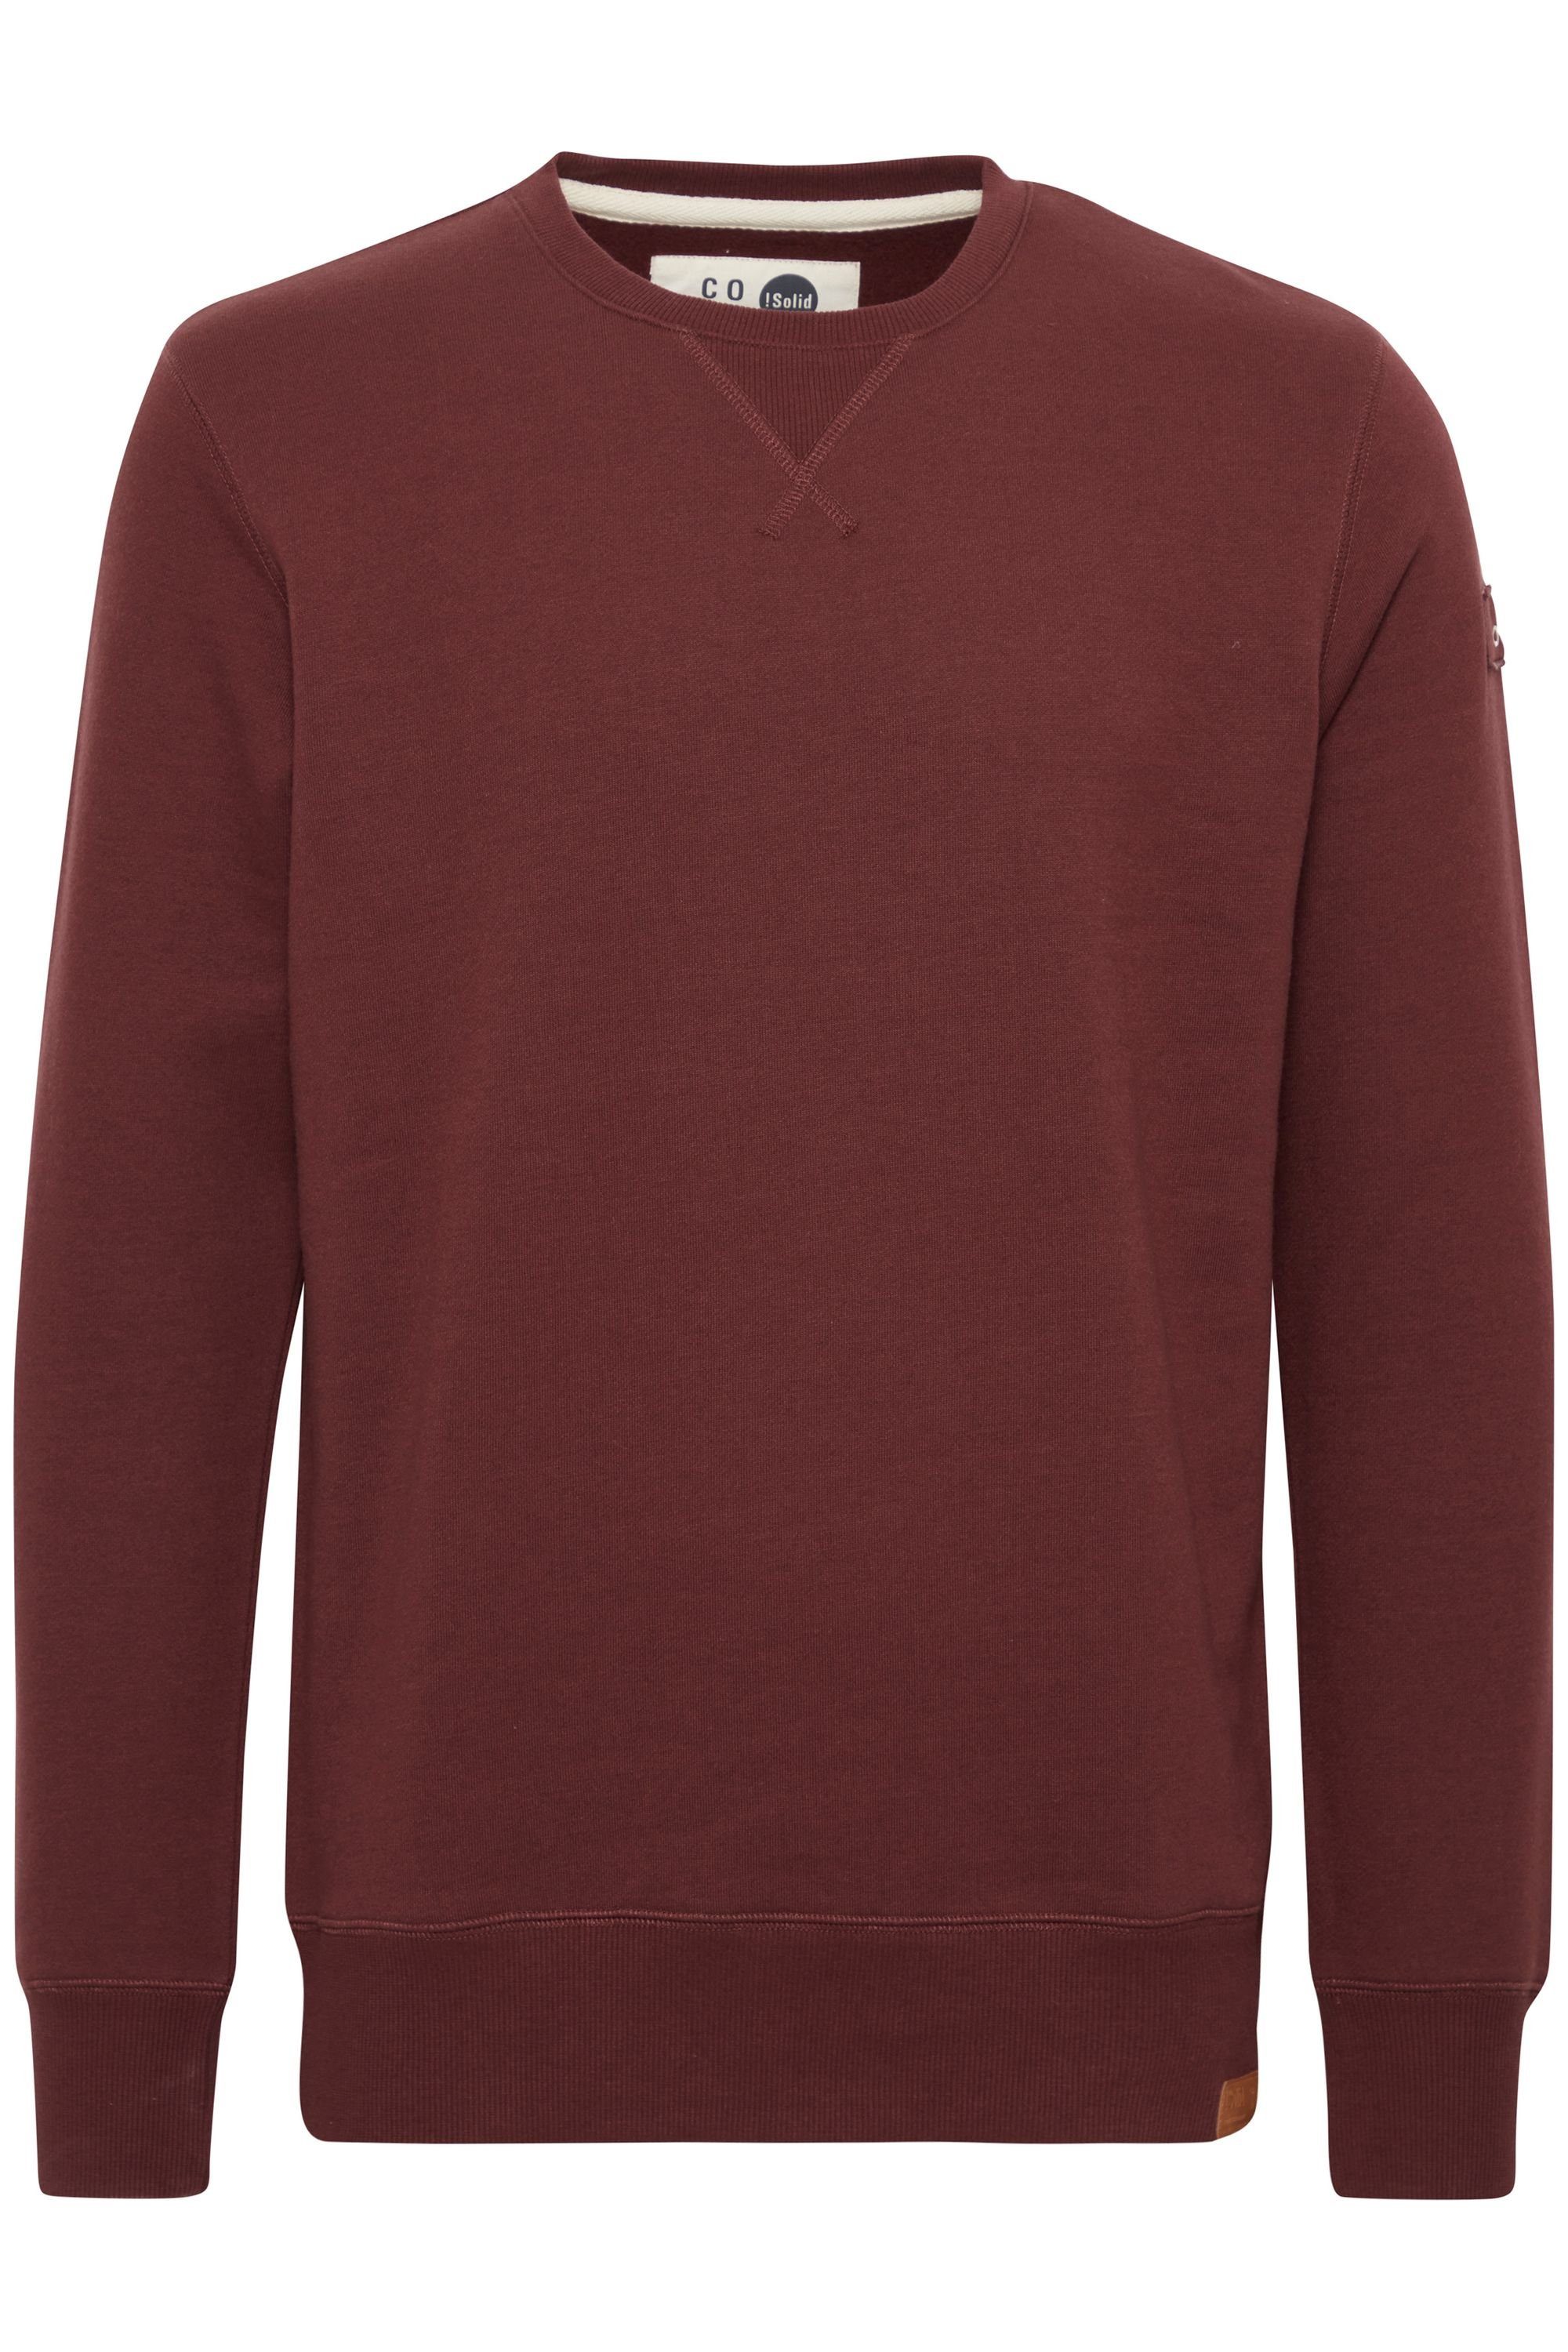 !Solid Sweatshirt O-Neck RED (790985) WINE SDTrip